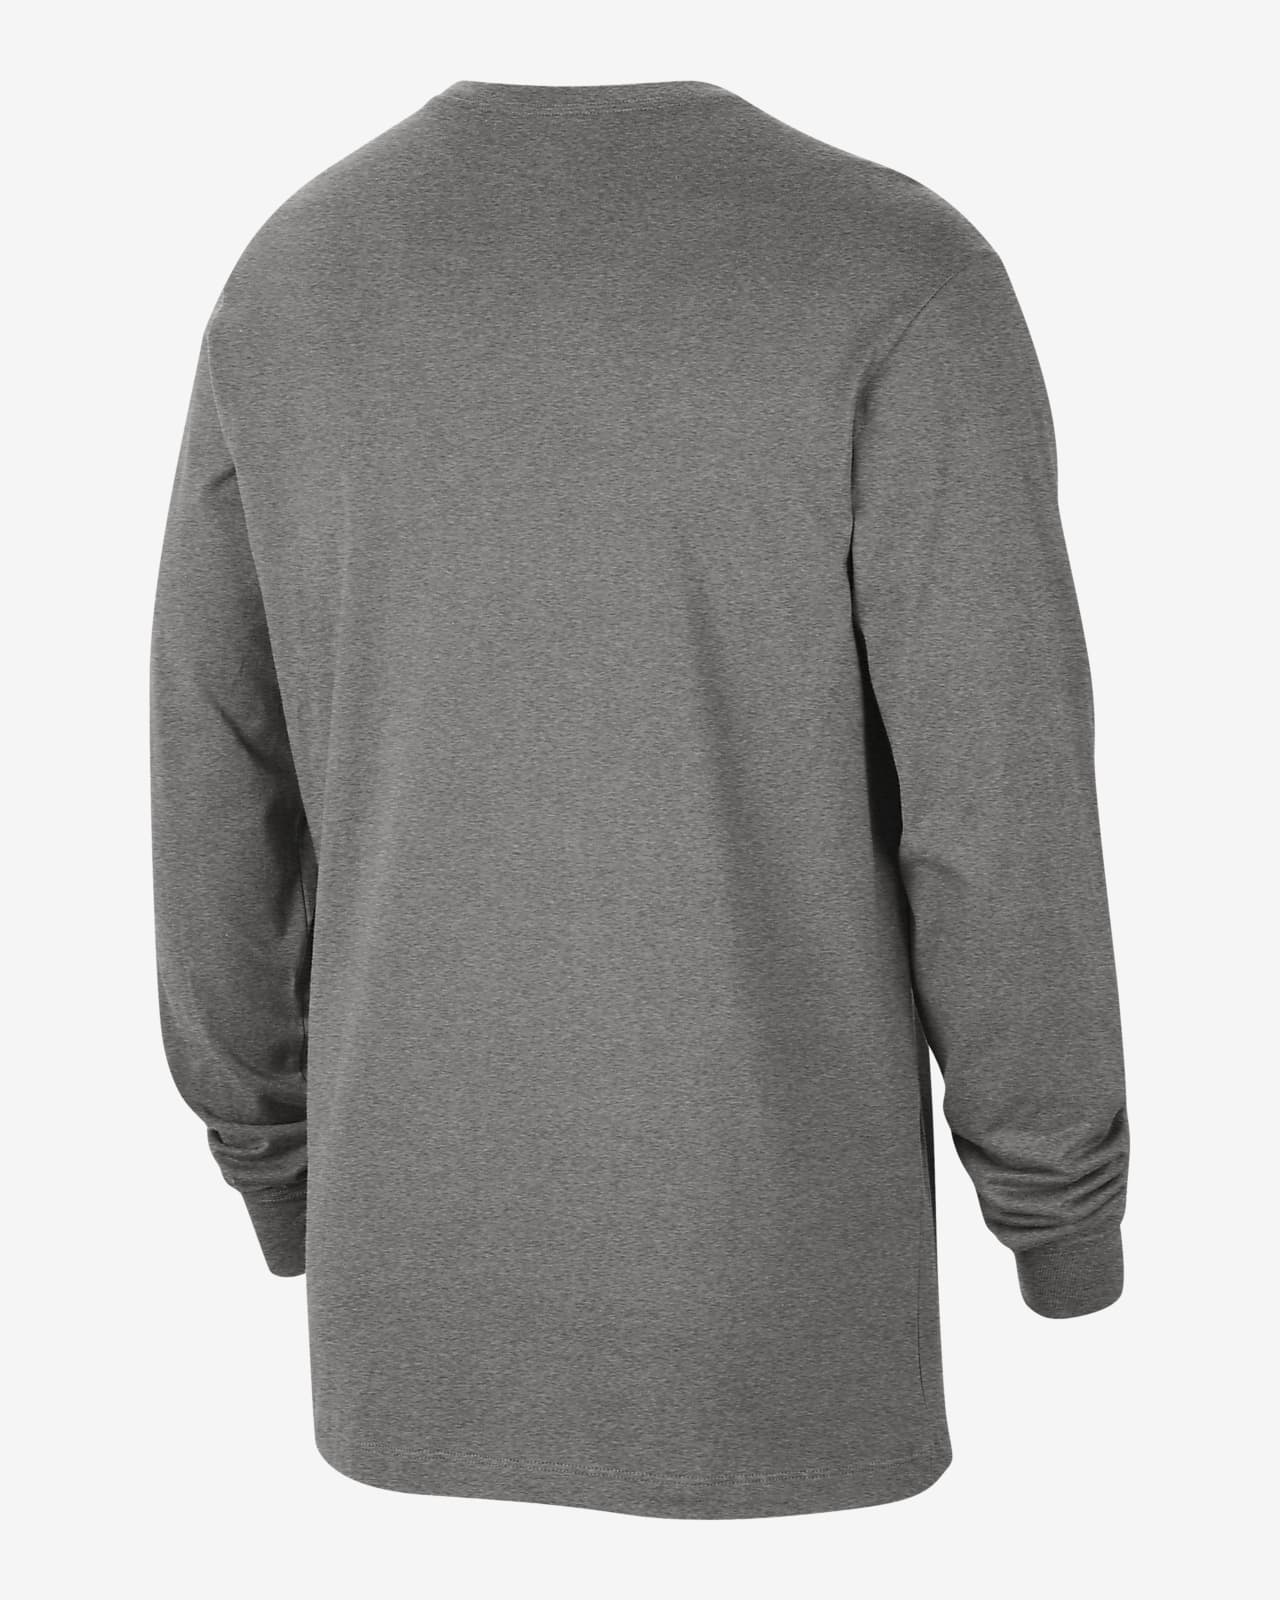 Oklahoma State Fast Break Men's Nike College Long-Sleeve T-Shirt